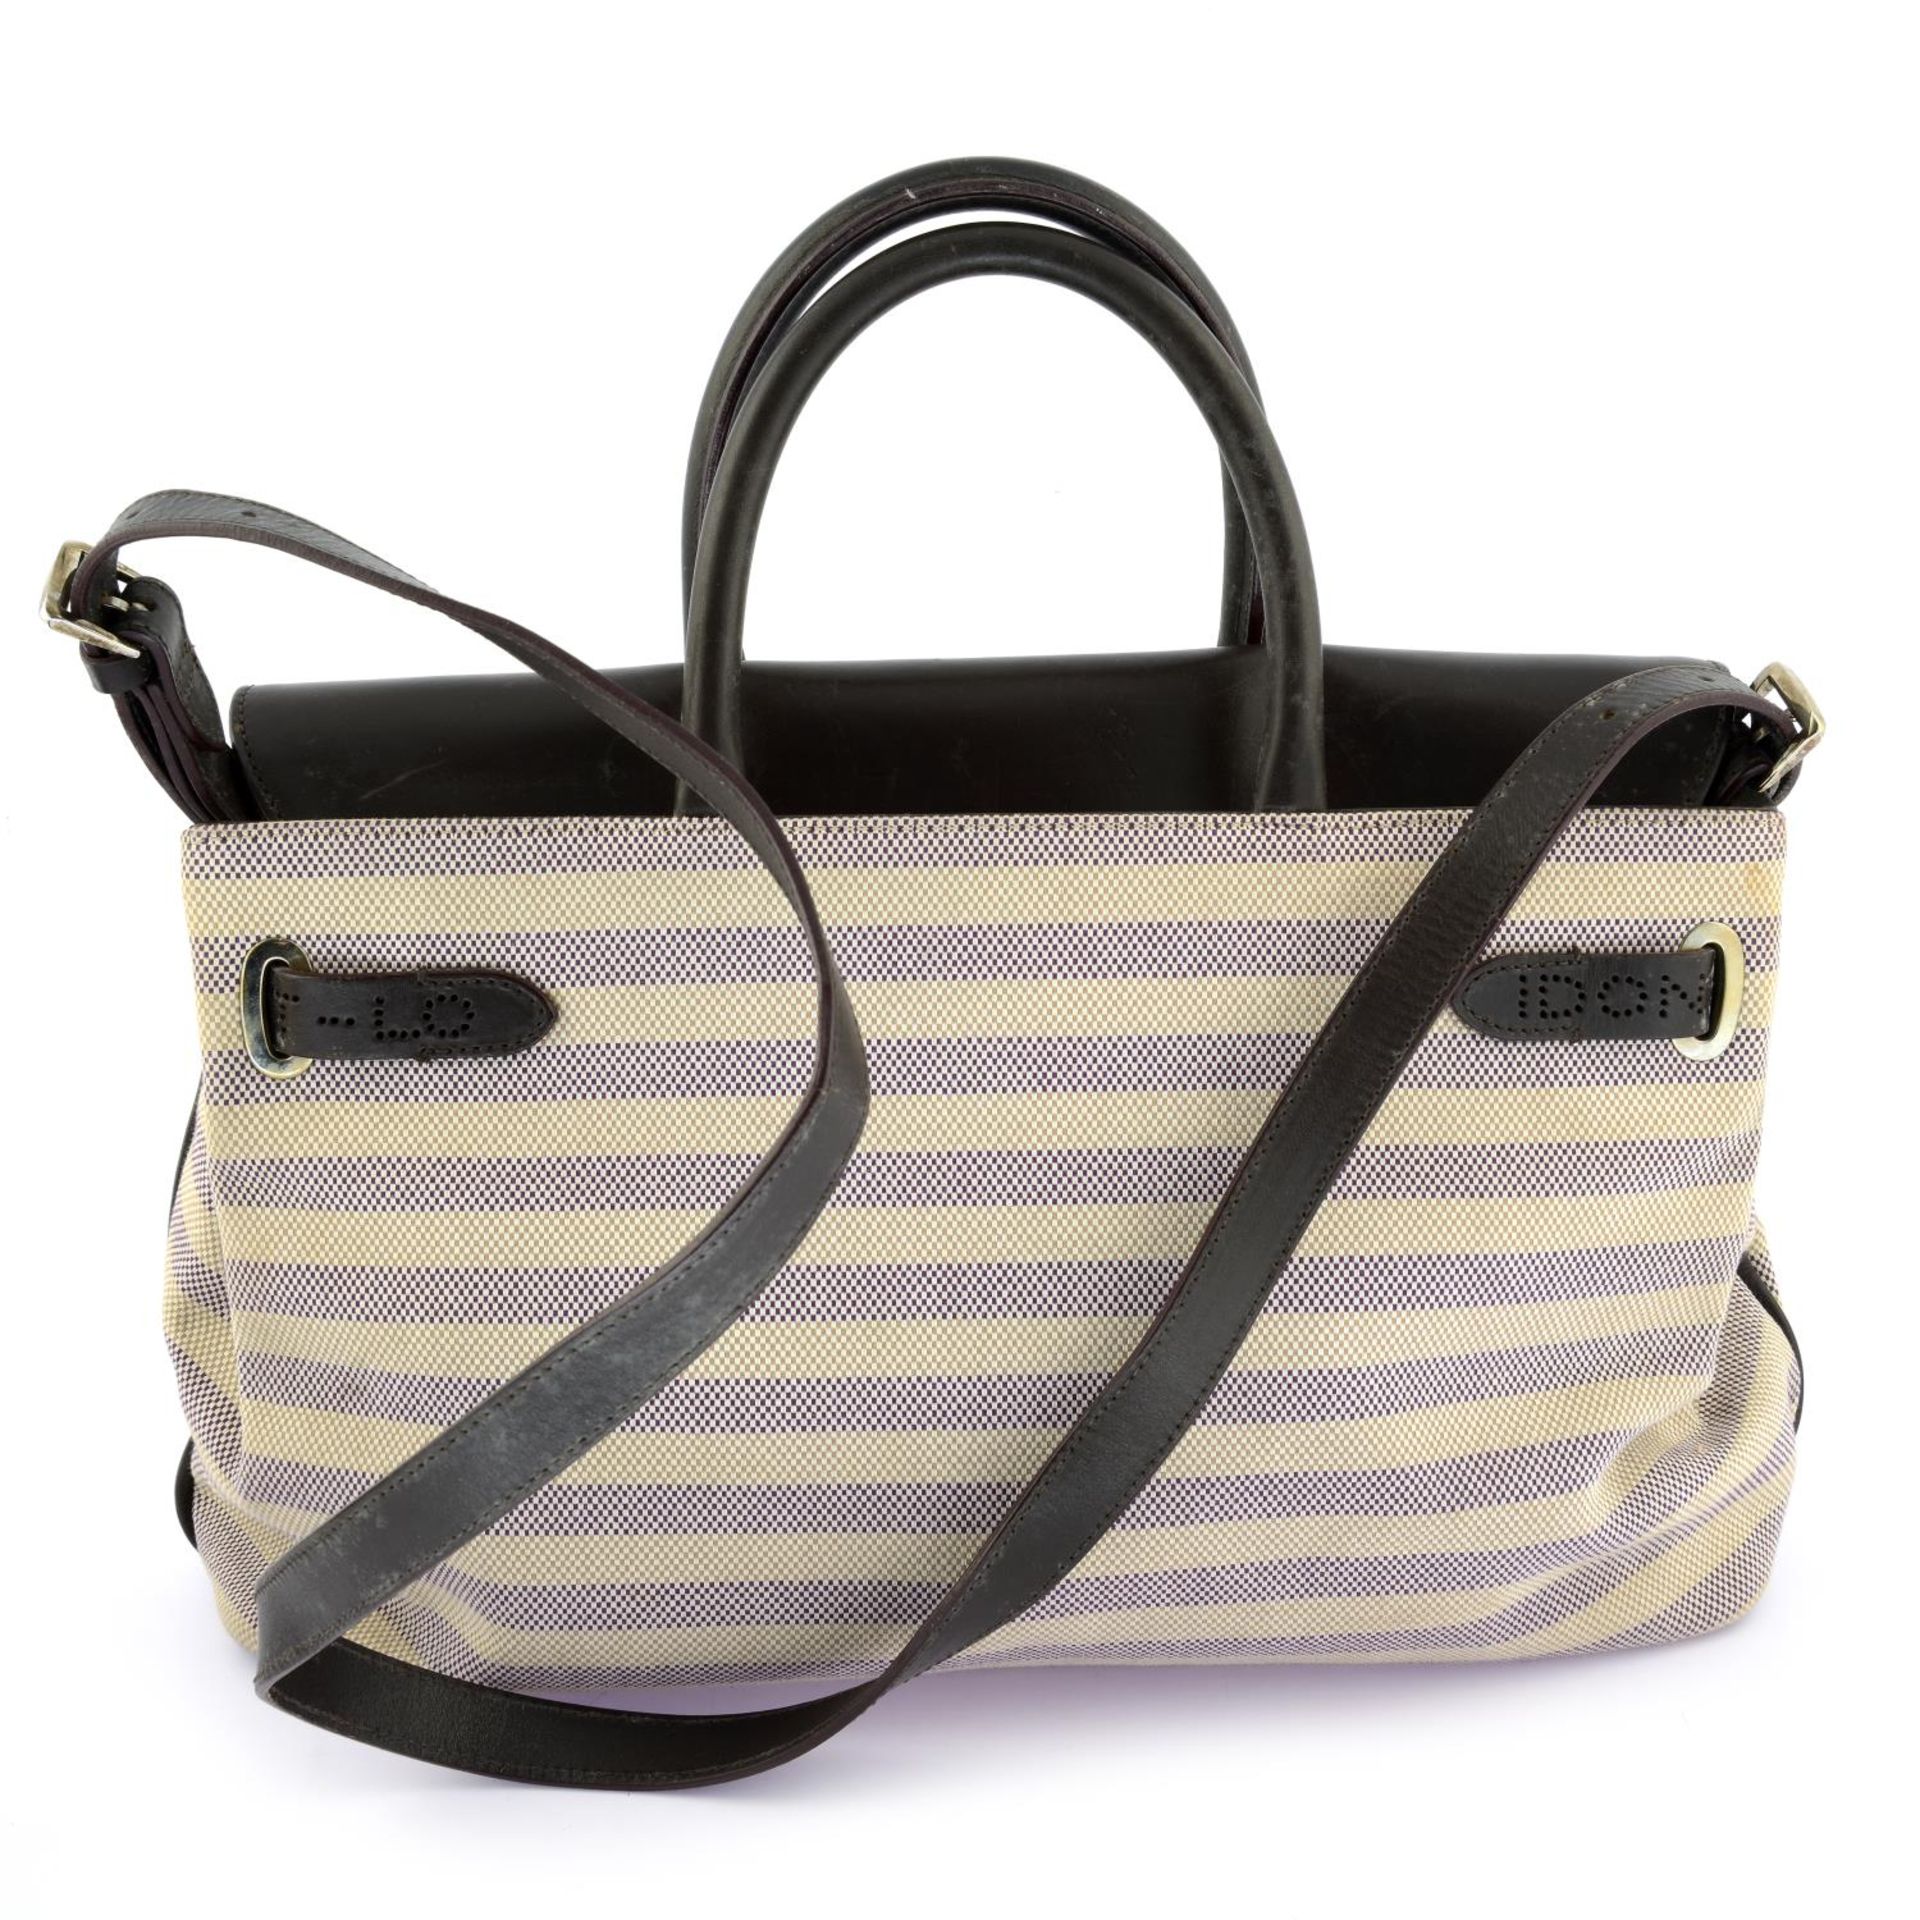 ASPREY - a canvas and leather tote handbag. - Image 2 of 9